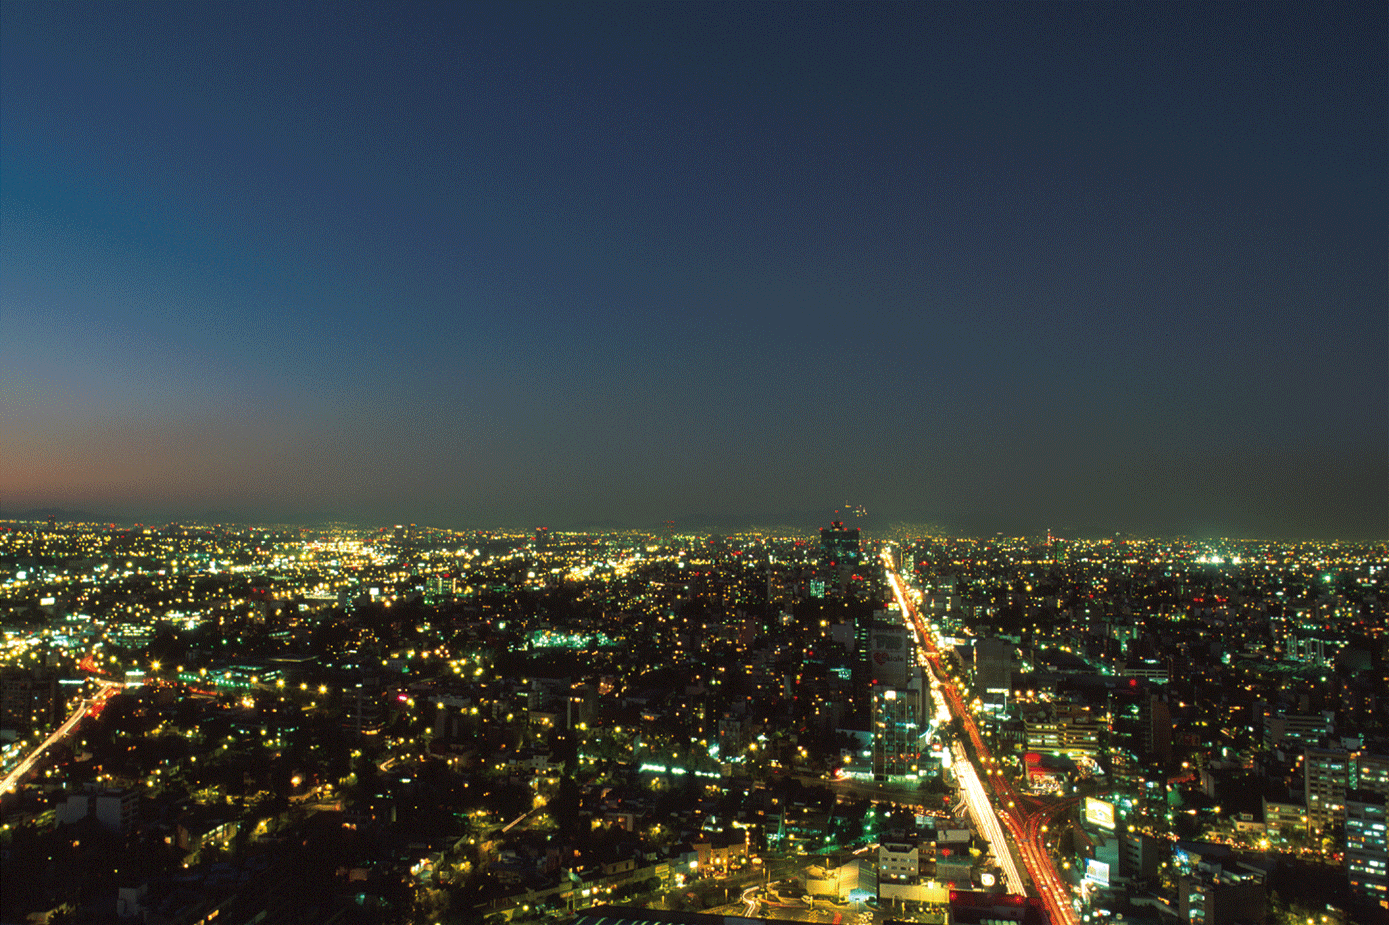 Mexico City. Mexico City Panoramic View At Night Travel photo and wallpaper. Viajes, Ciudad de méxico, Ciudades